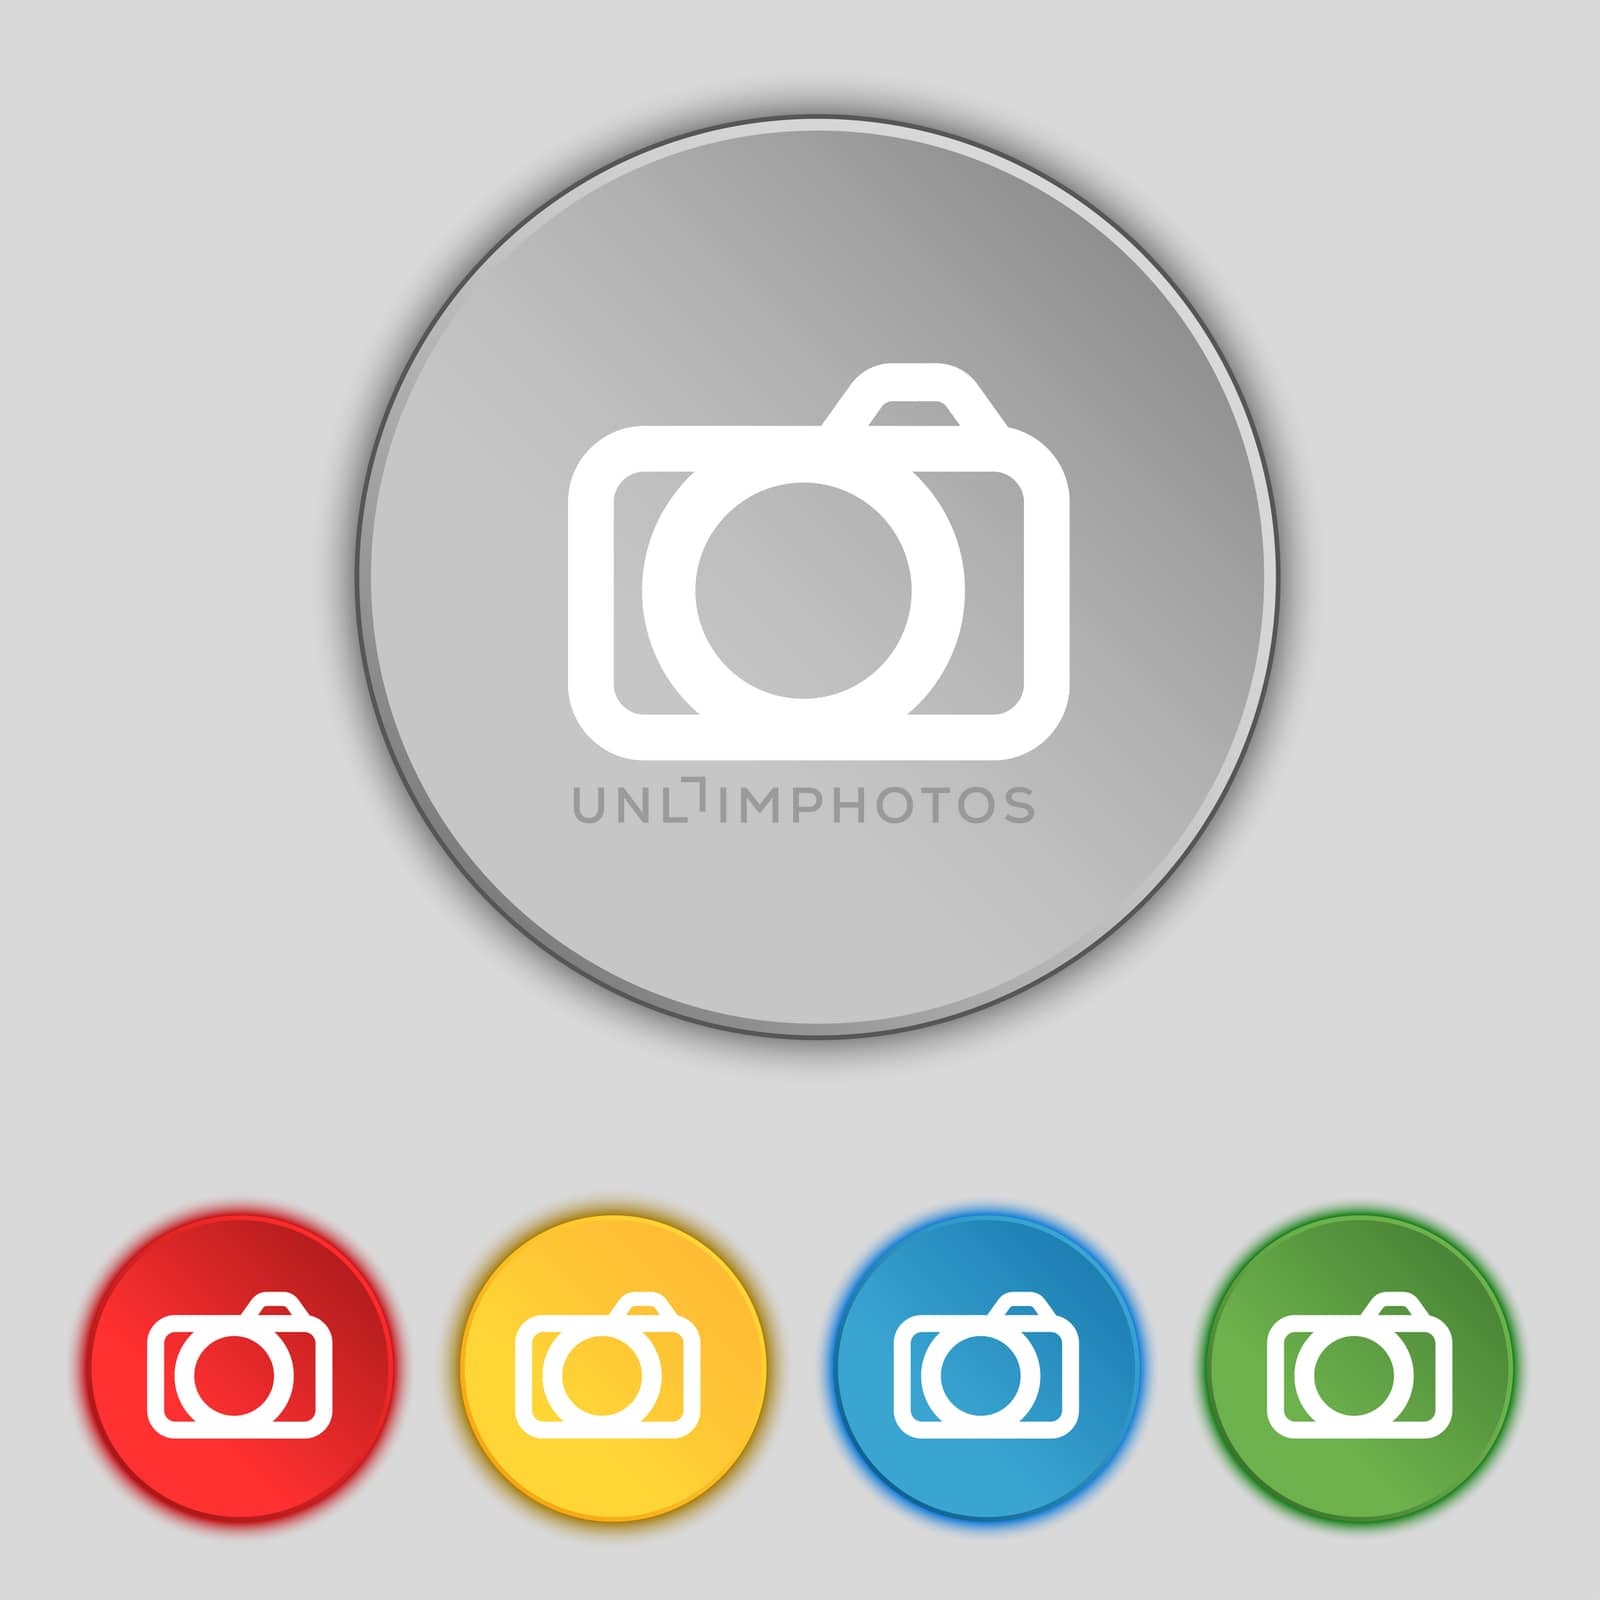 Photo camera sign icon. Digital photo camera symbol. Set colourful buttons. illustration